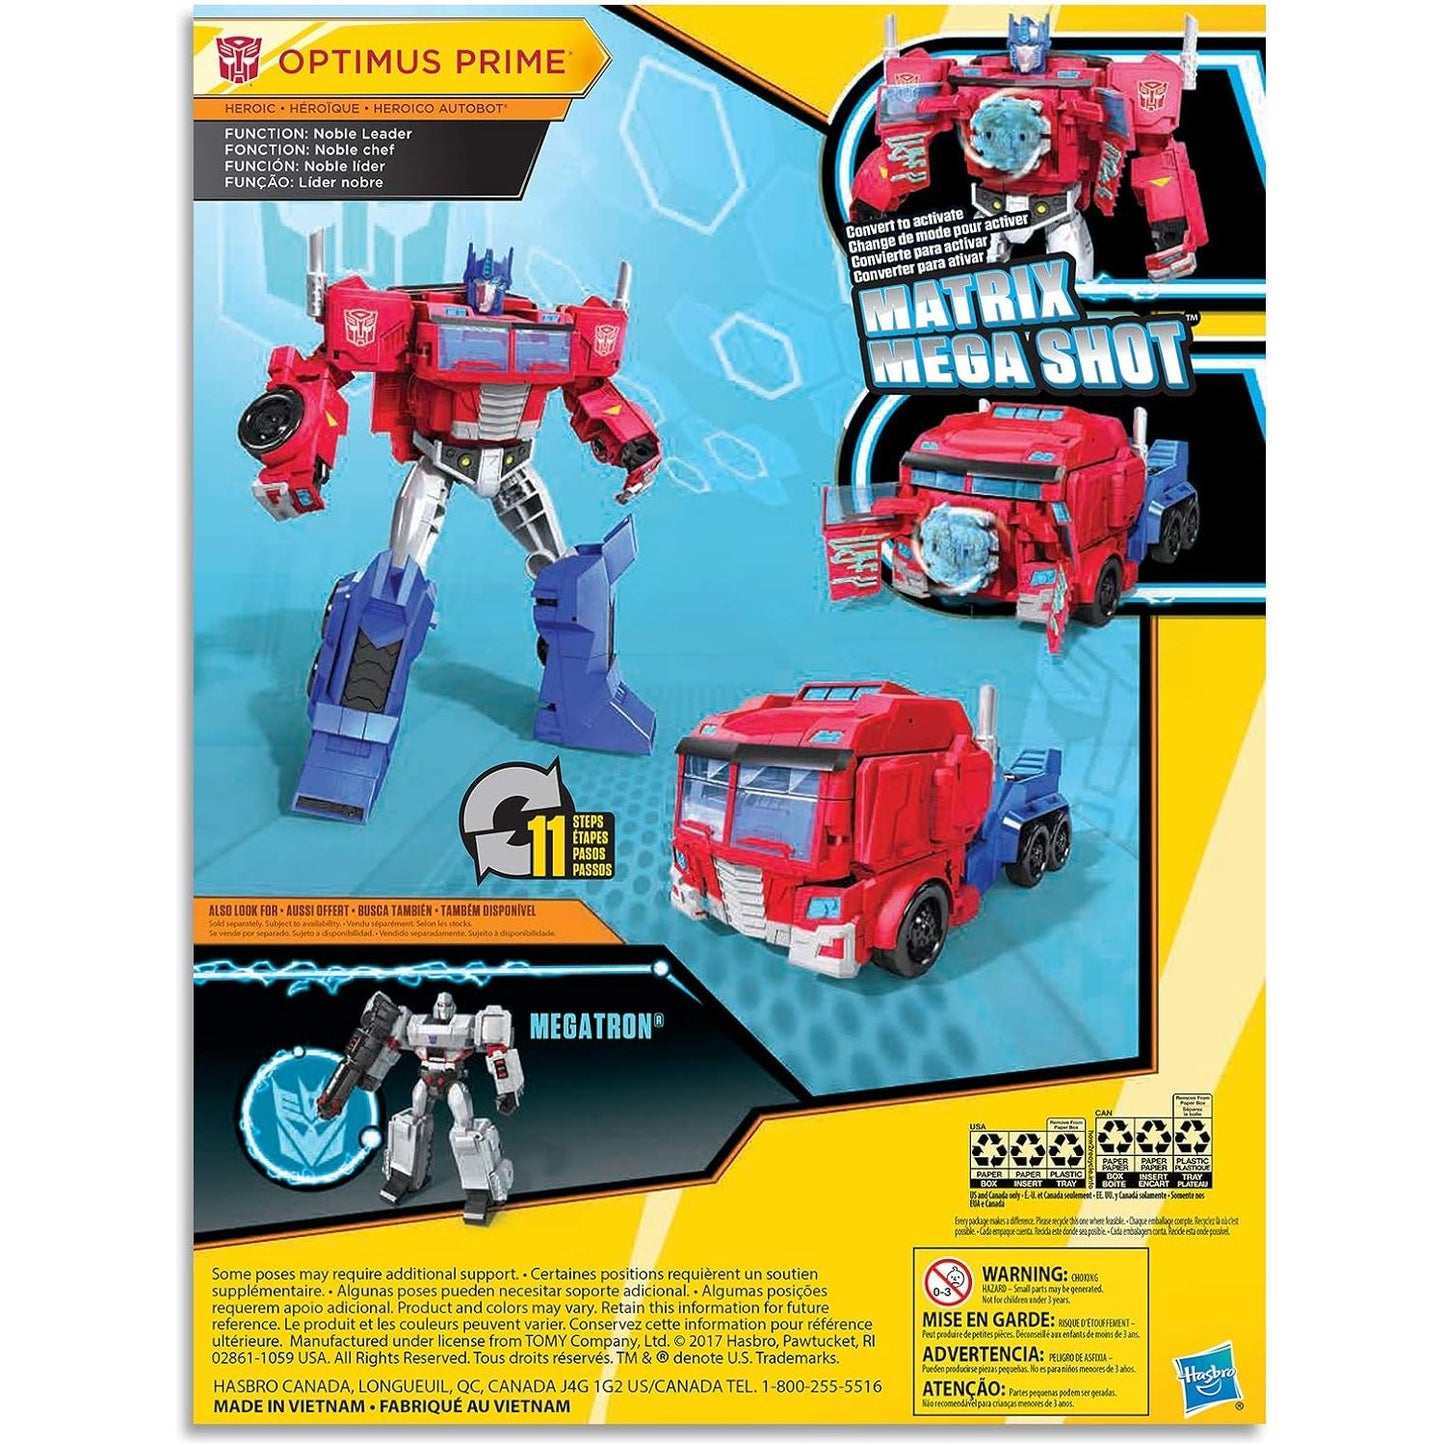 Hasbro Transformers Matrix Mega Shot Action Figure - Optimus Prime